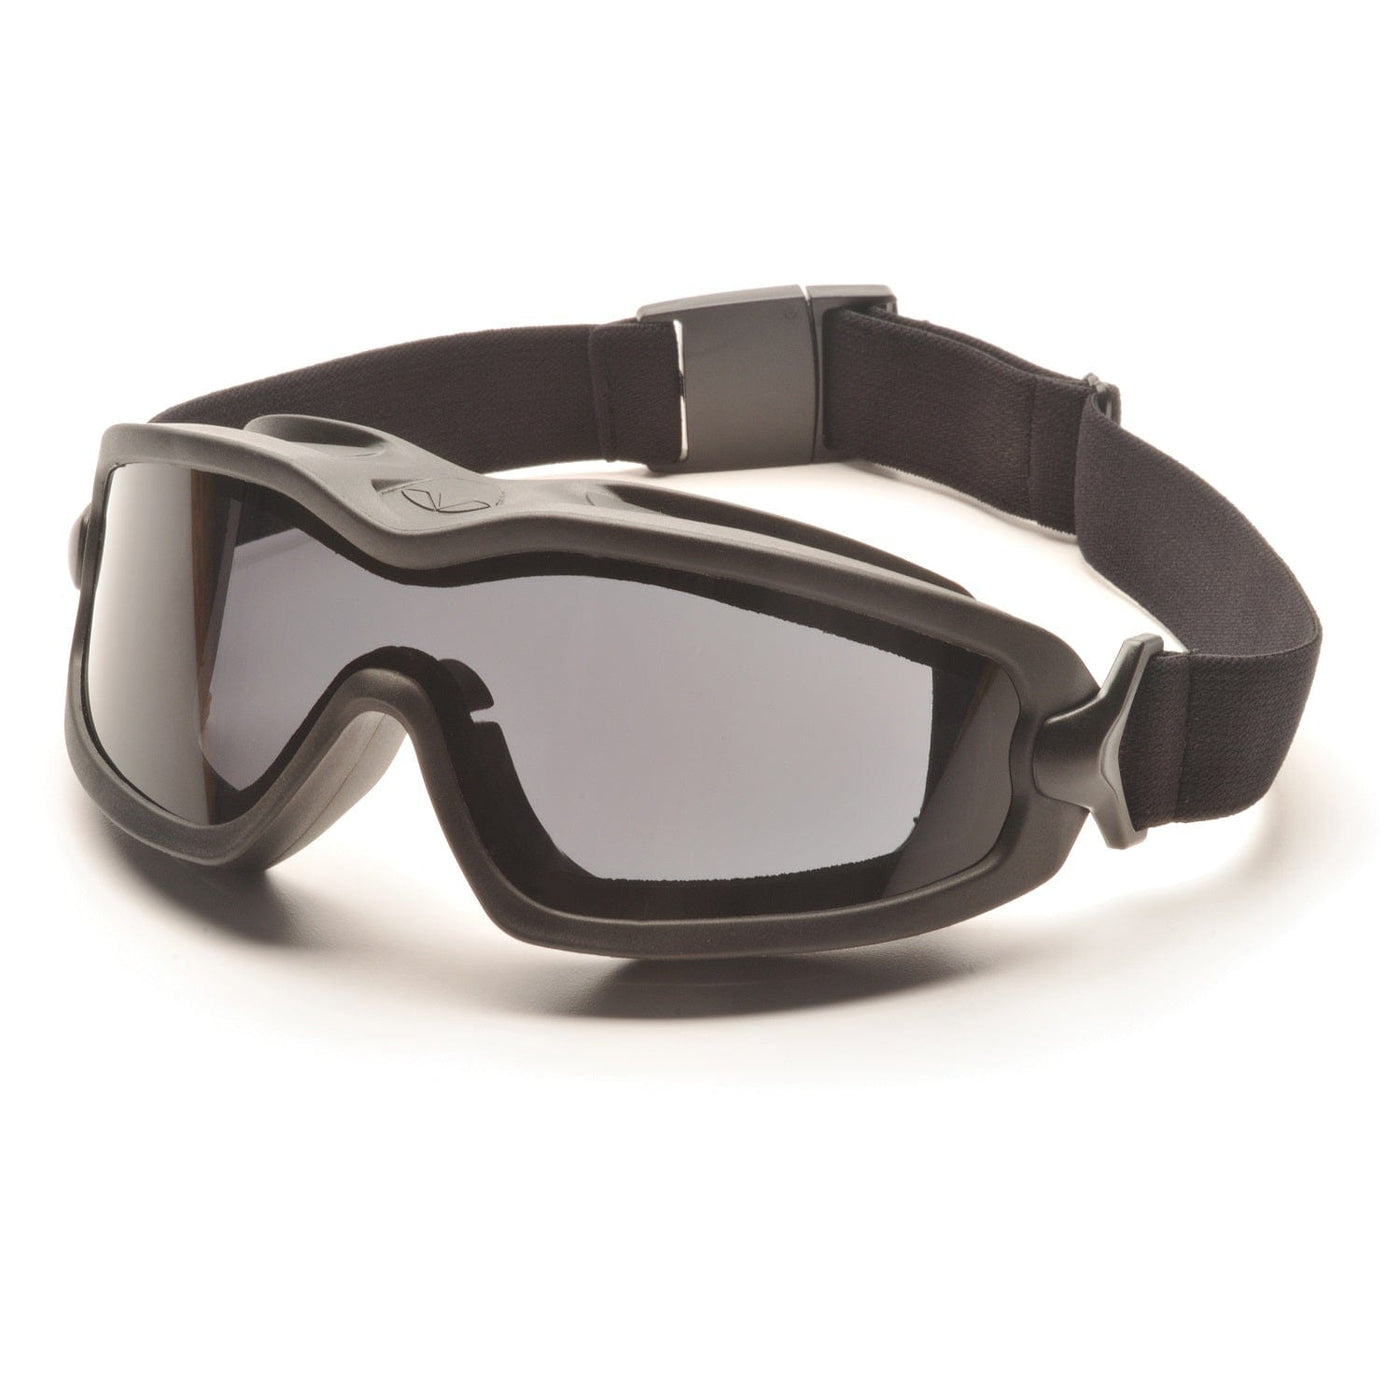 Pyramex Safety Products Pyramex V2G-Plus Goggles Black Strap Gray Dual AF Lens Apparel